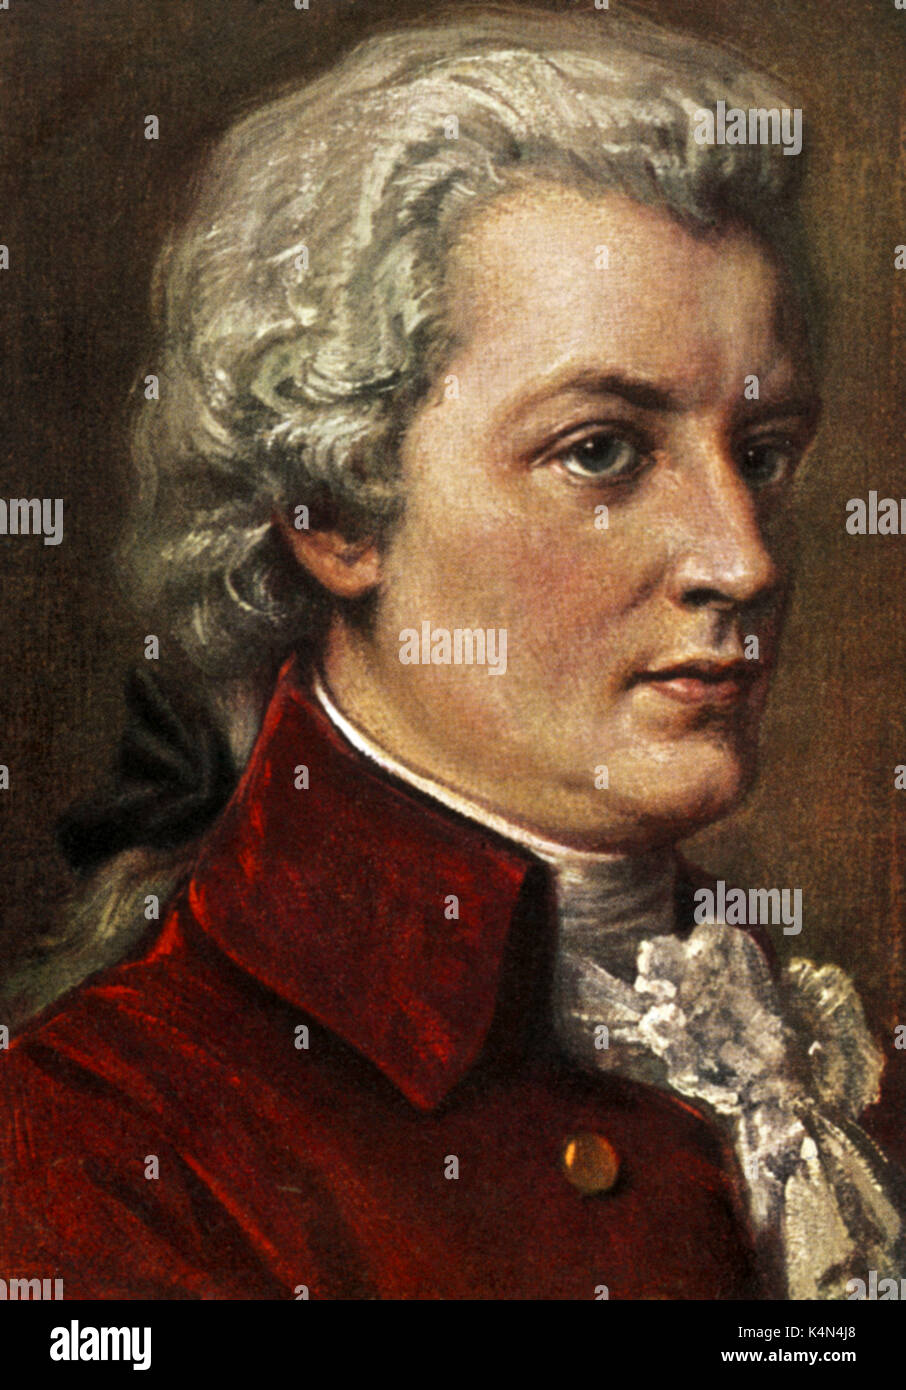 Wolfgang Amadeus Mozart - portrait.  Austrian composer, 27 January 1756 - 5 December 1791. Stock Photo